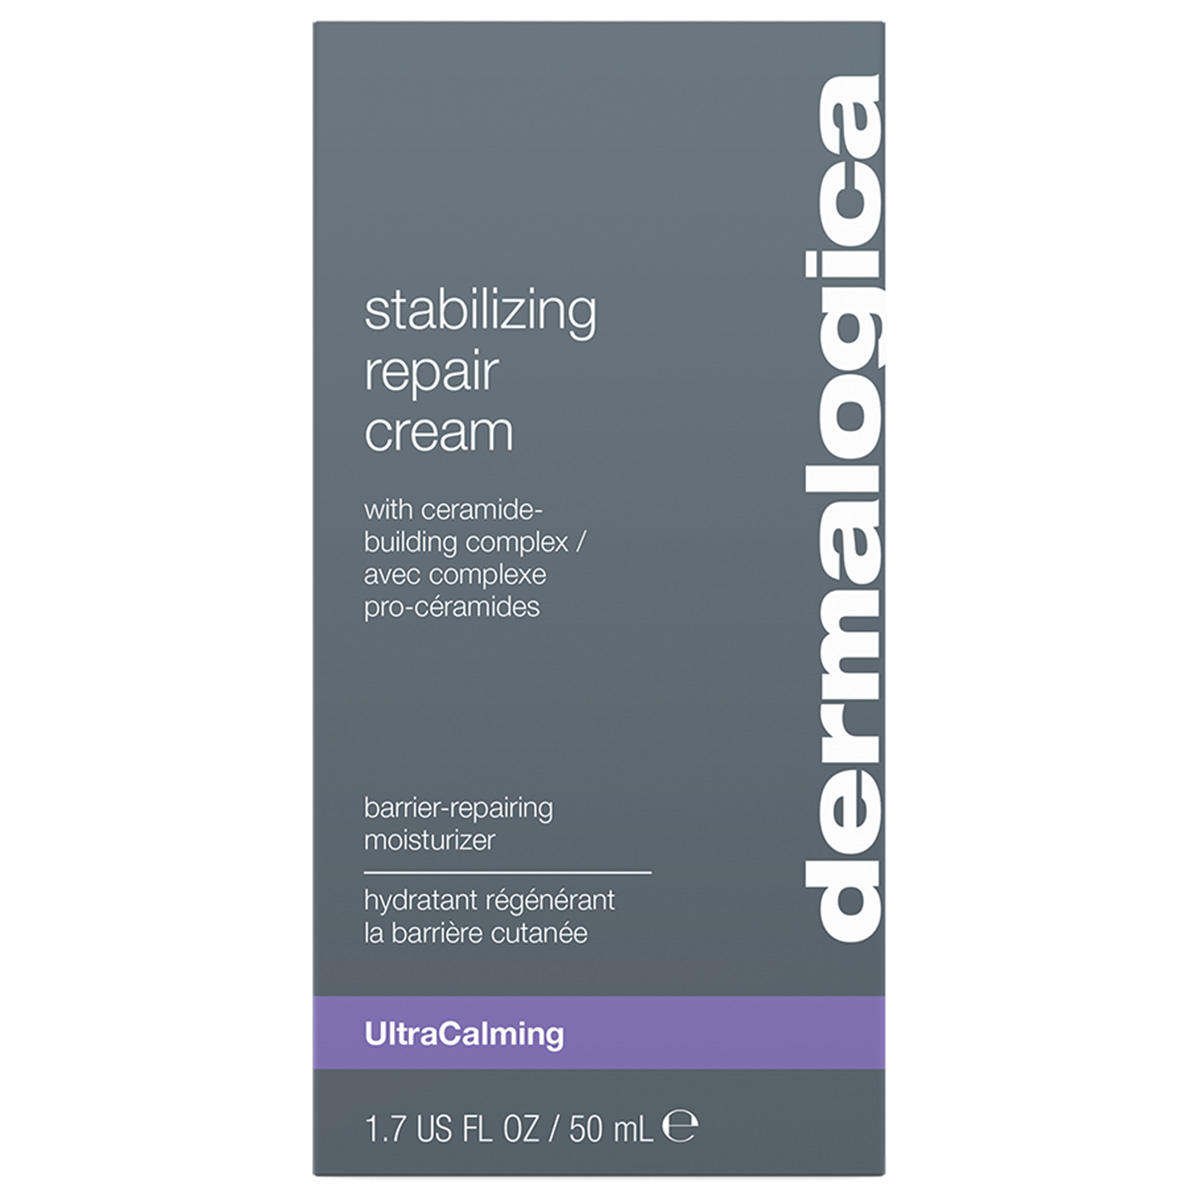 Dermalogica Stabilizing Repair Cream 50 ml - 1